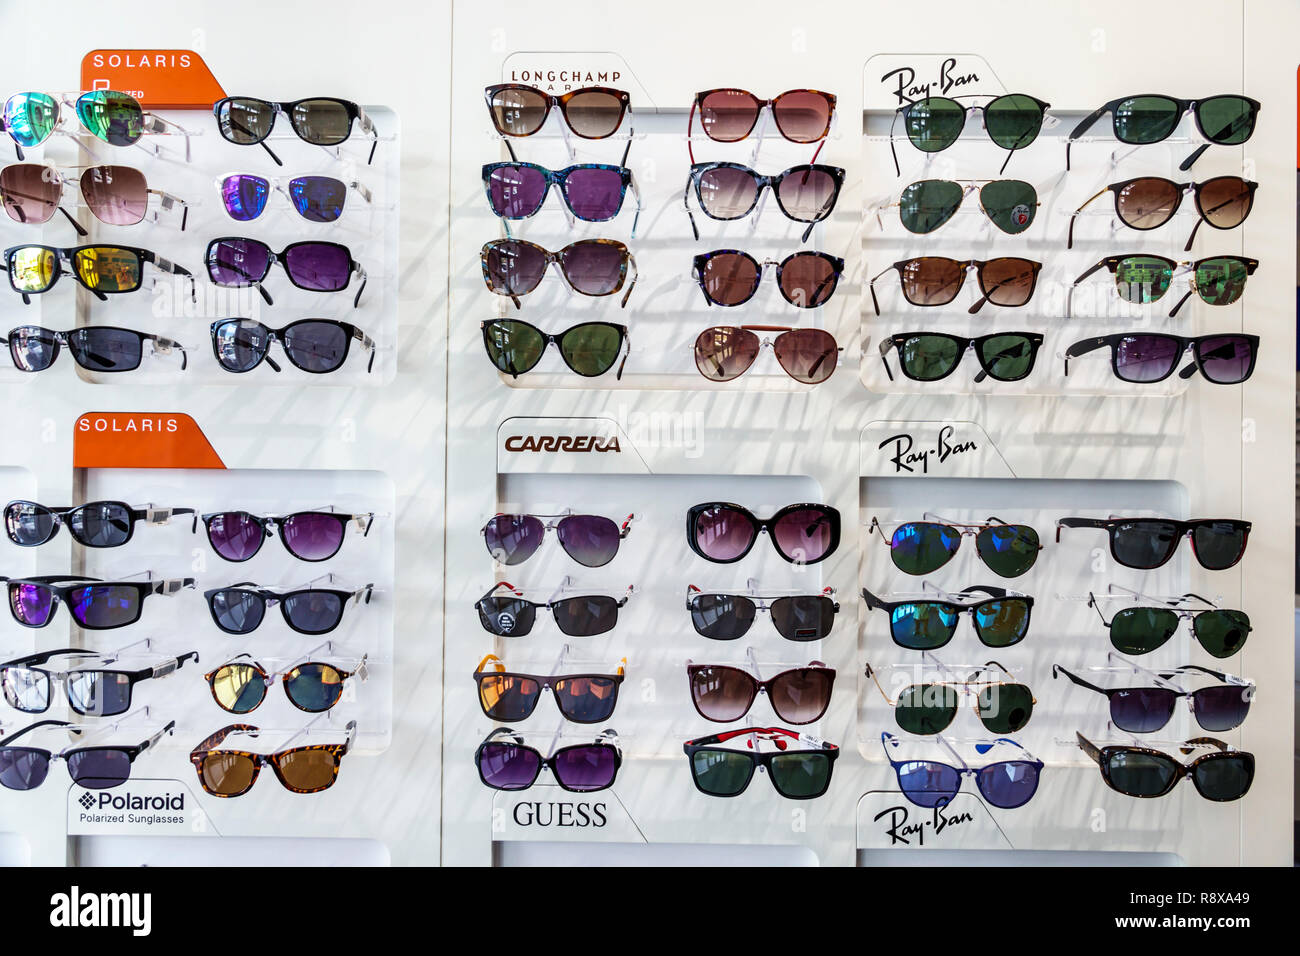 Miami Beach Florida,optician optometrist business store,eyeglasses display sale,Solaris Longchamp Carrera Ray-Ban,sunglasses frames,FL181205141 Stock Photo